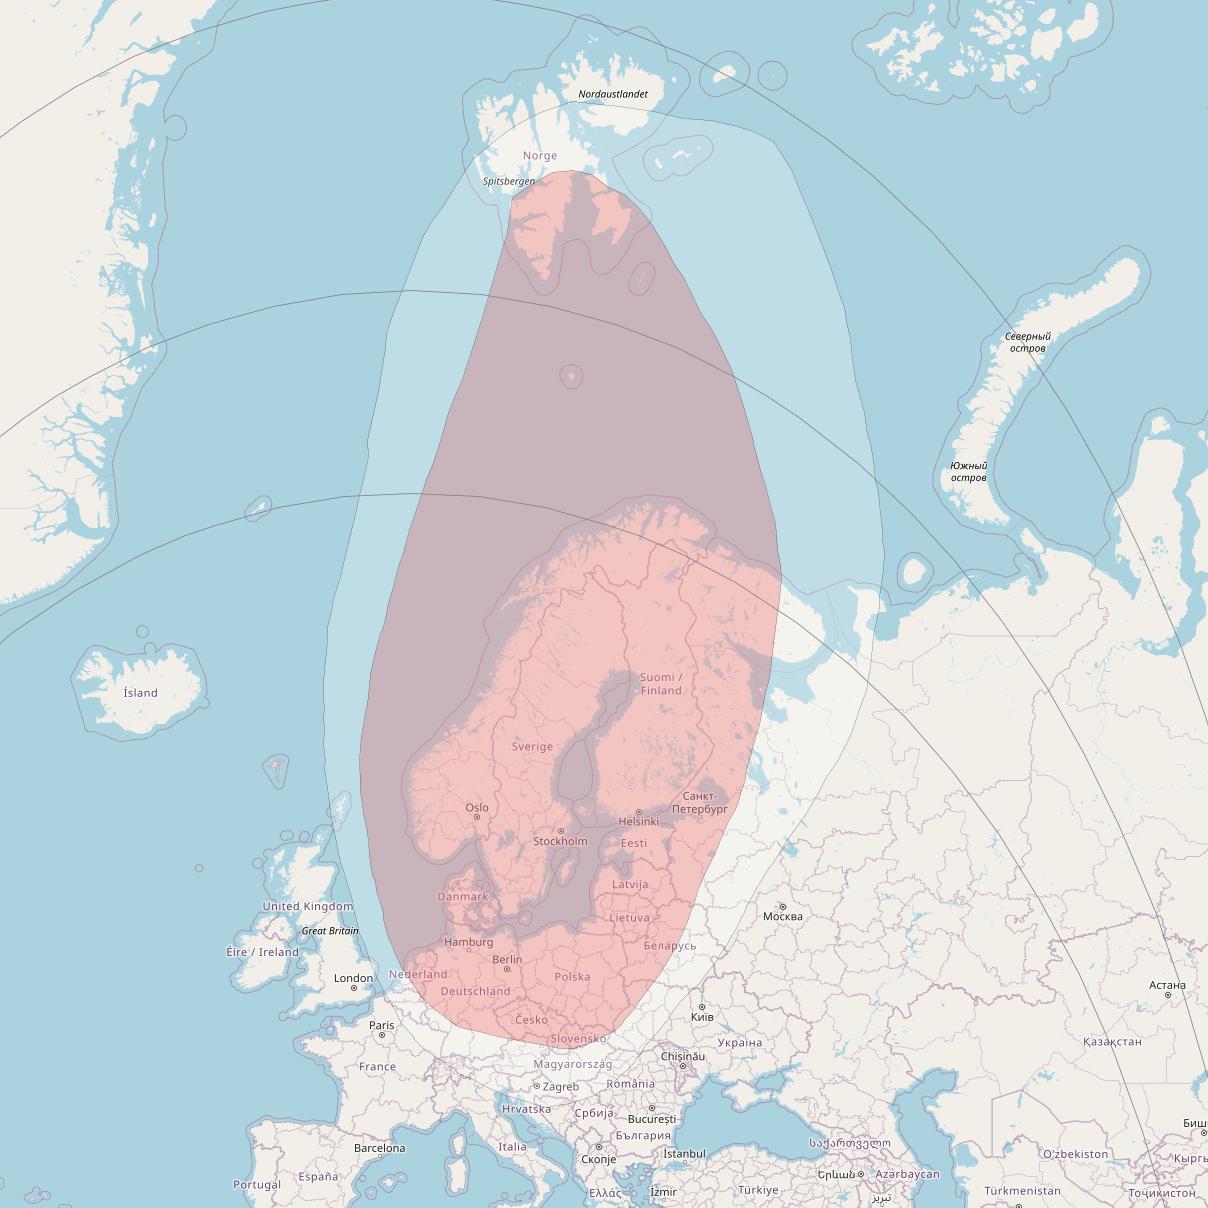 Astra 4A at 5° E downlink Ku-band Nordic BSS Beam coverage map